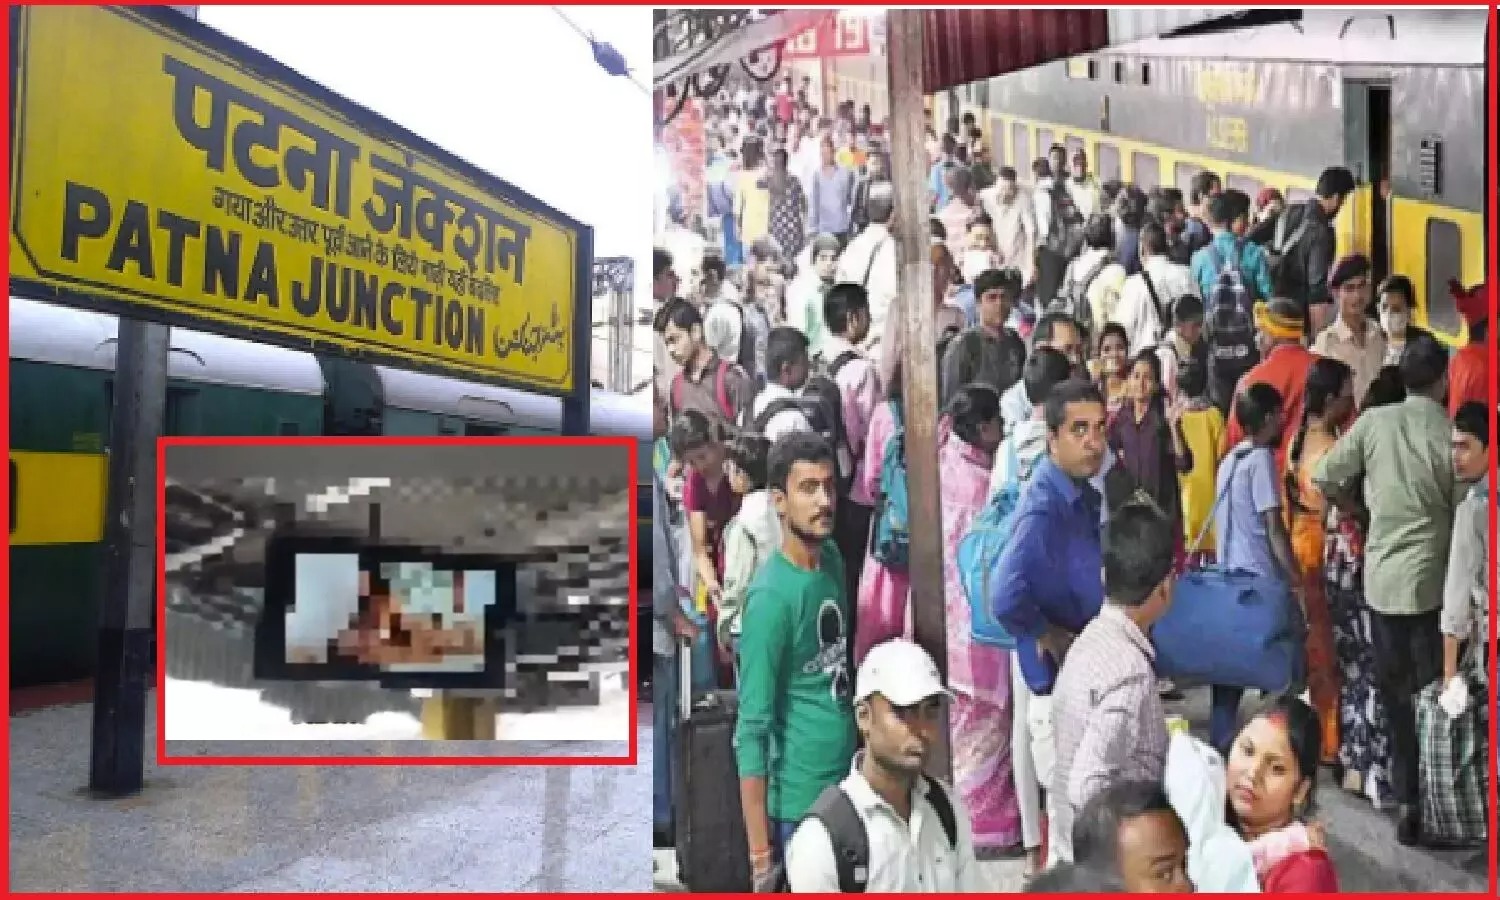 Patna Junction Porn Video